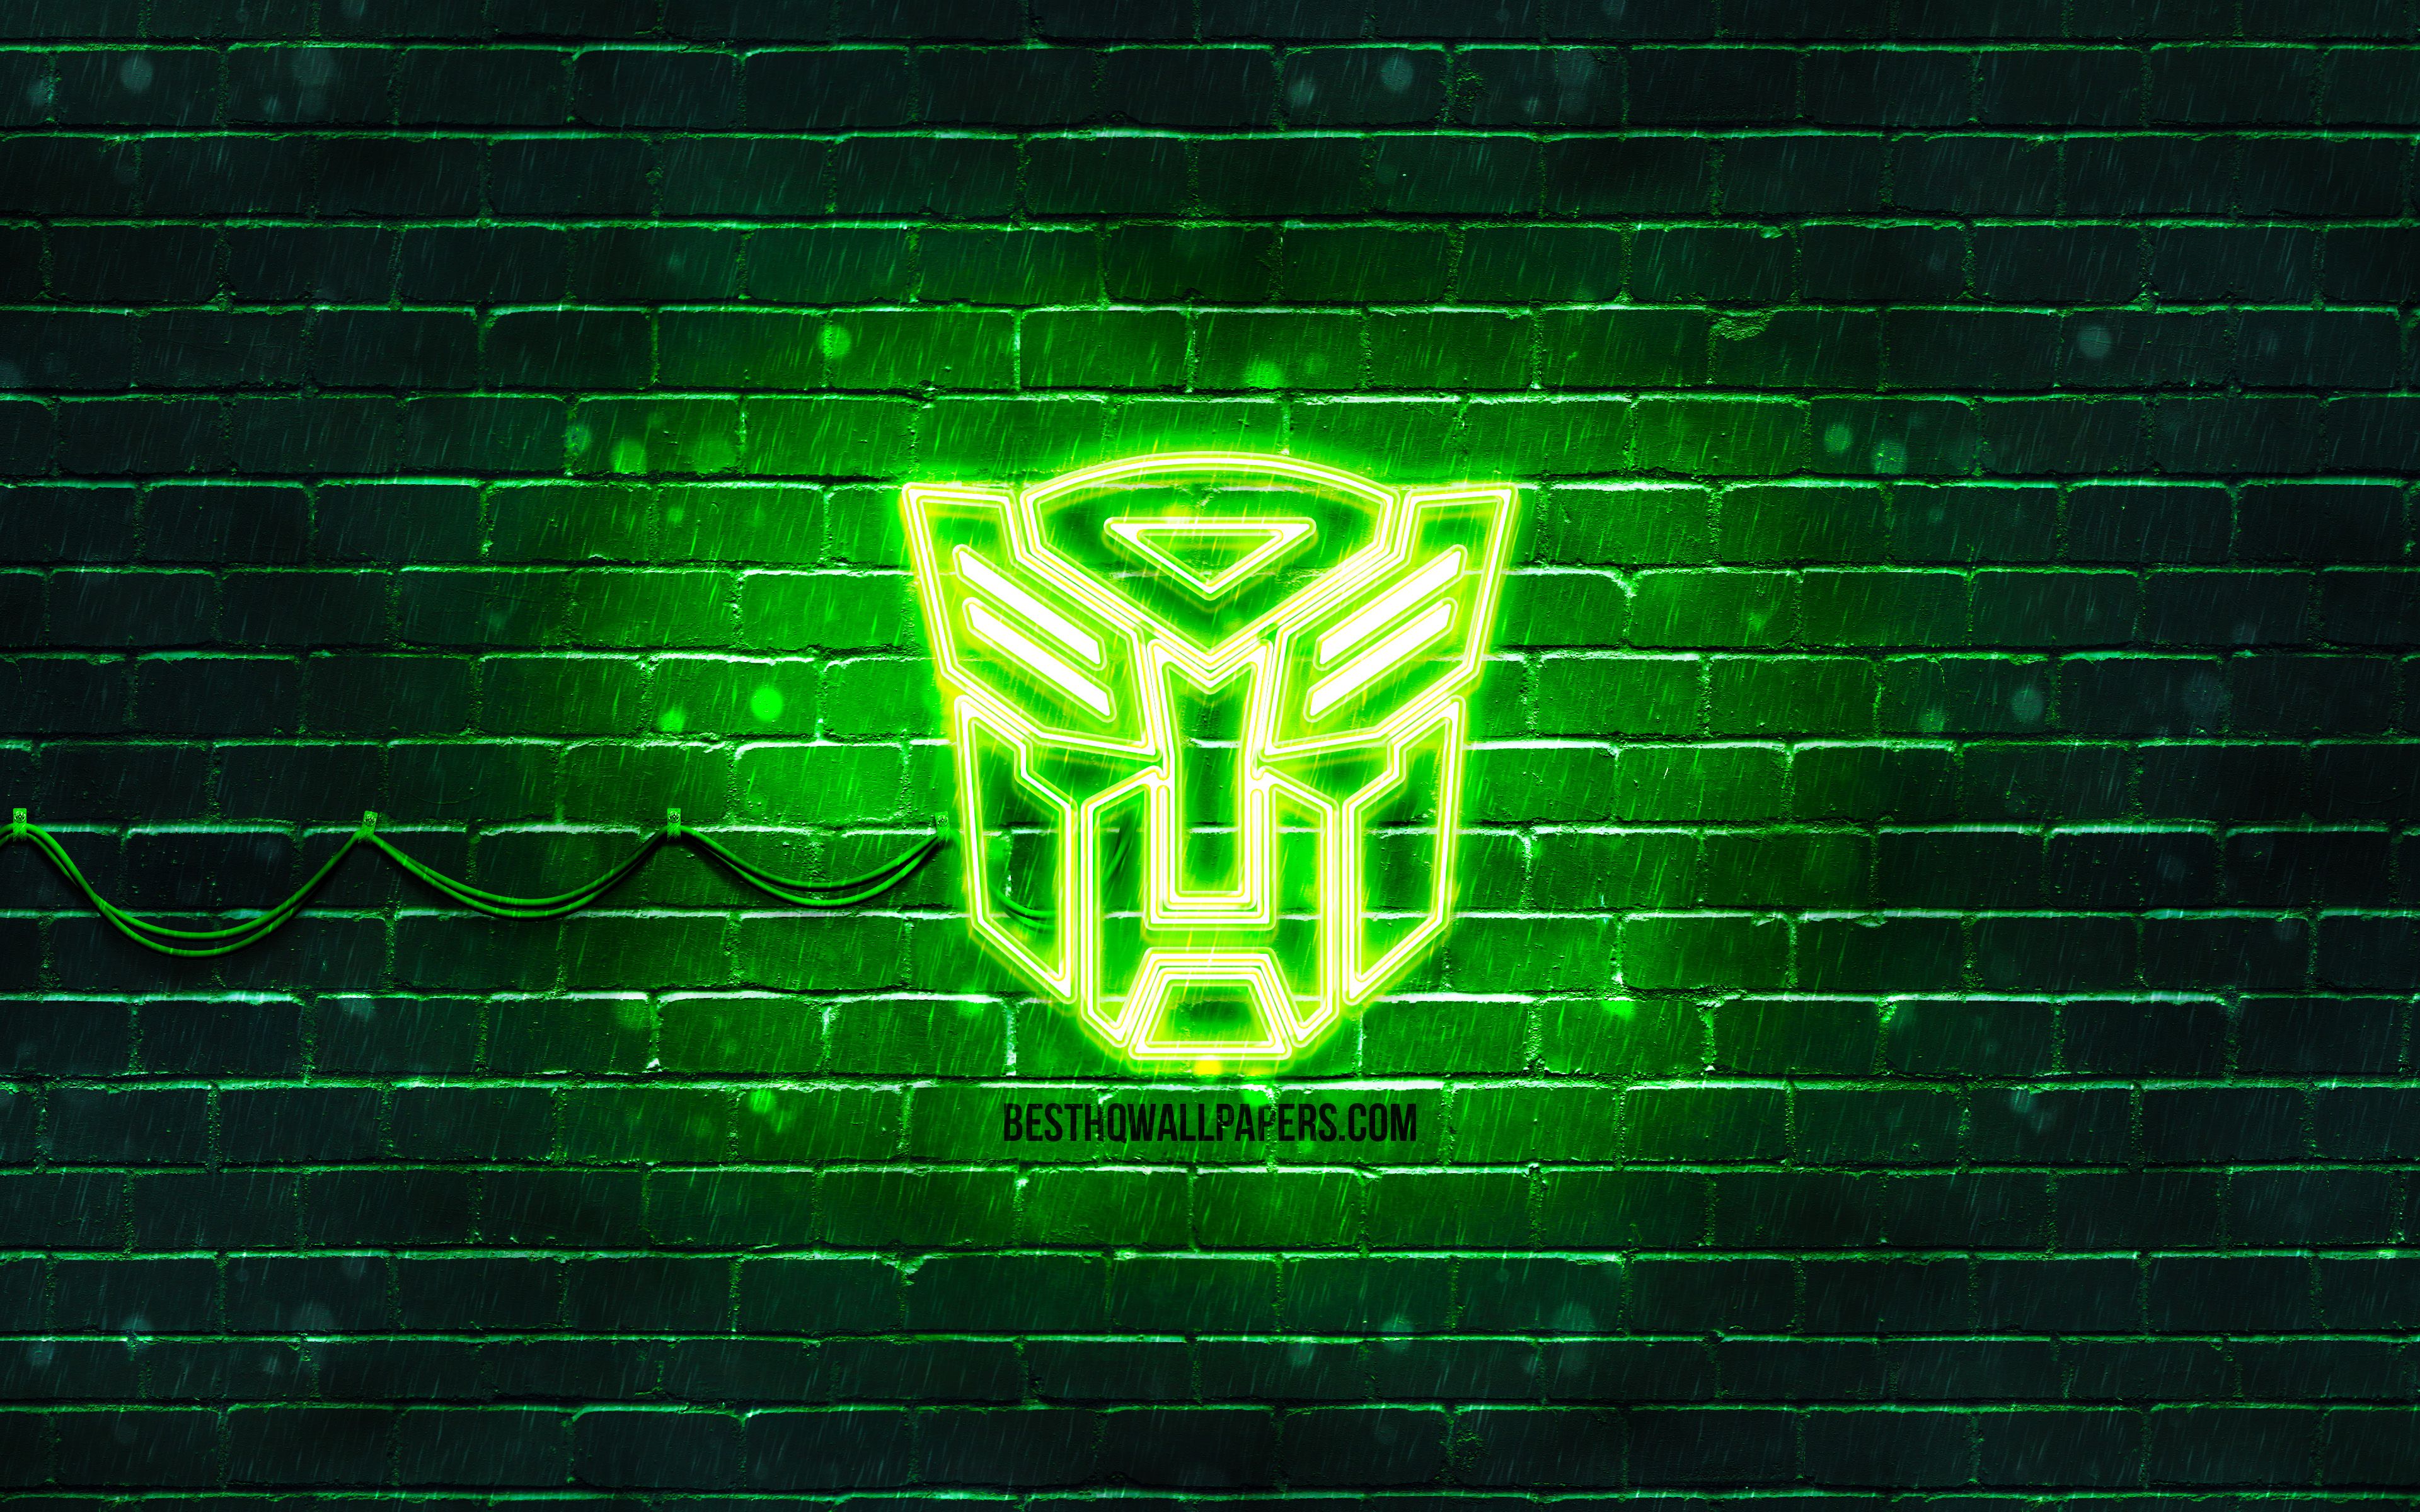 Download wallpaper Transformers green logo, 4k, green brickwall, Transformers logo, movies, Transformers neon logo, Transformers for desktop with resolution 3840x2400. High Quality HD picture wallpaper